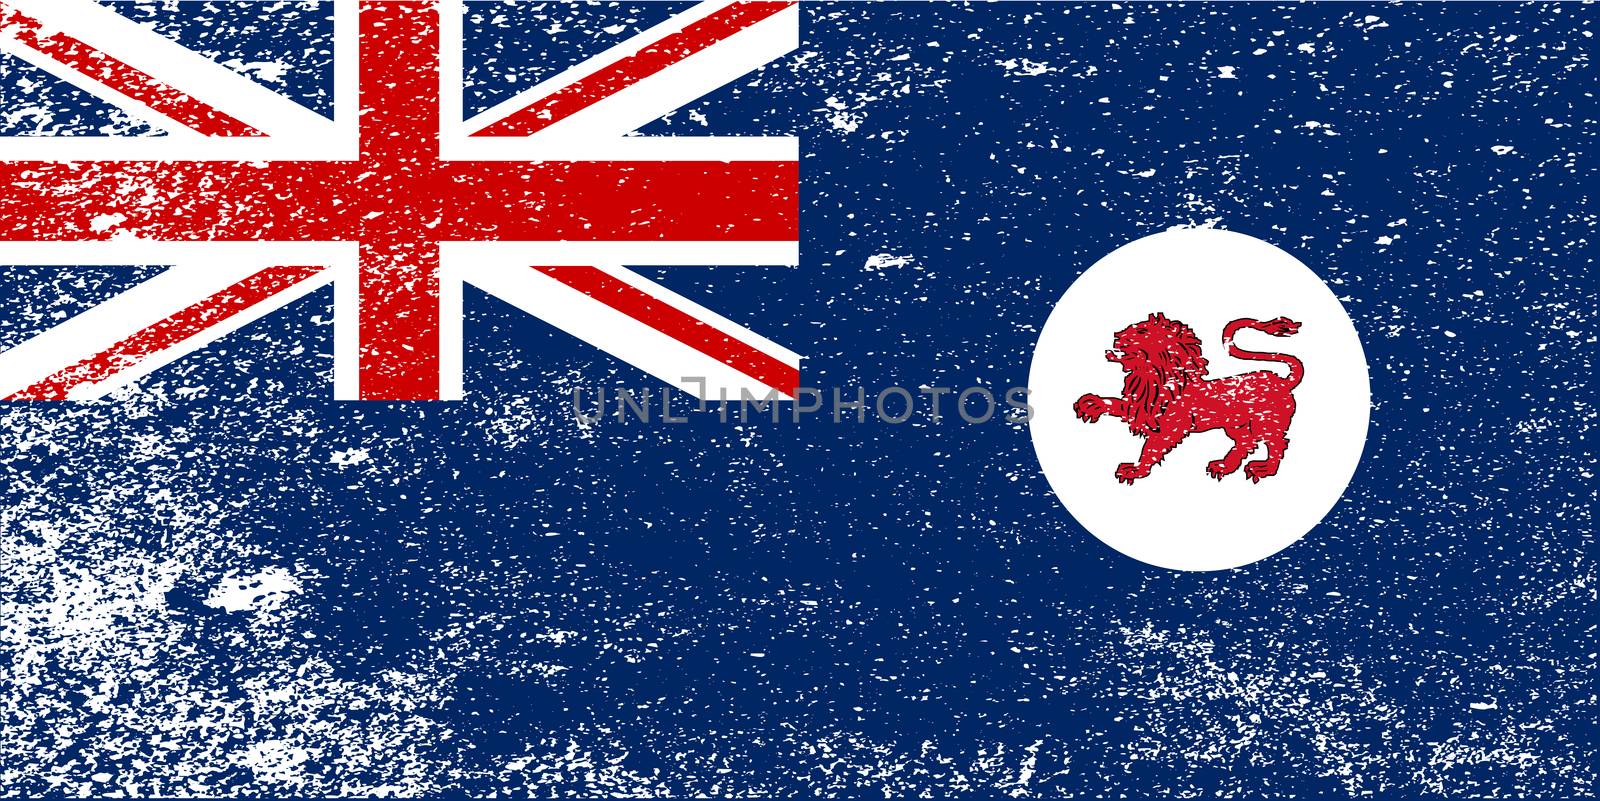 Tasmania State Grunge Flag by Bigalbaloo